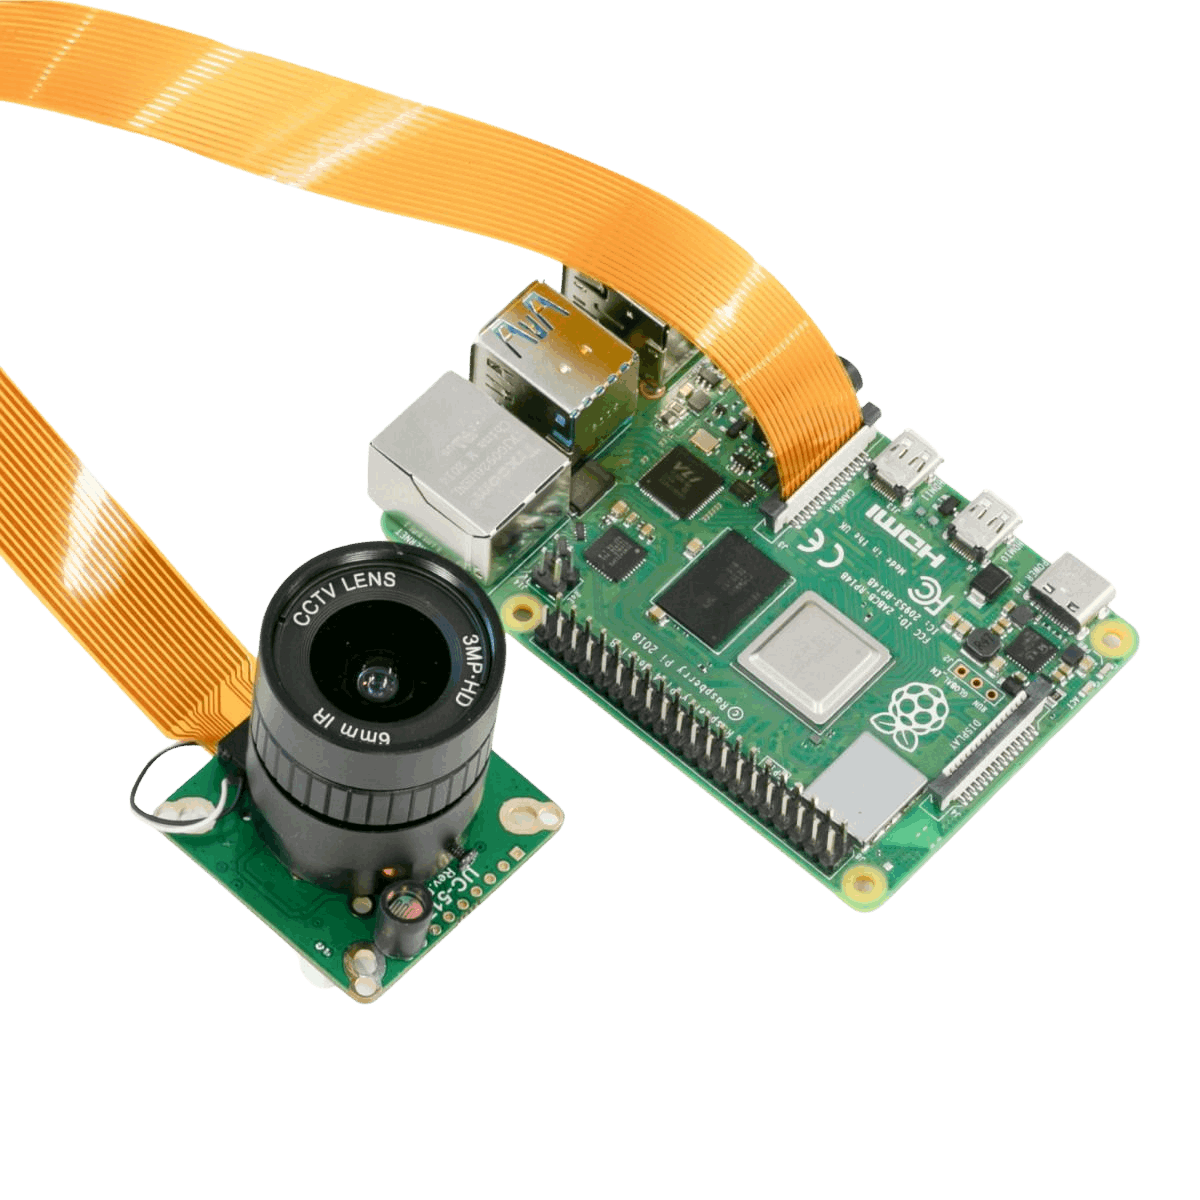 Arducam B0240 camera module connected to a Raspberry Pi Board